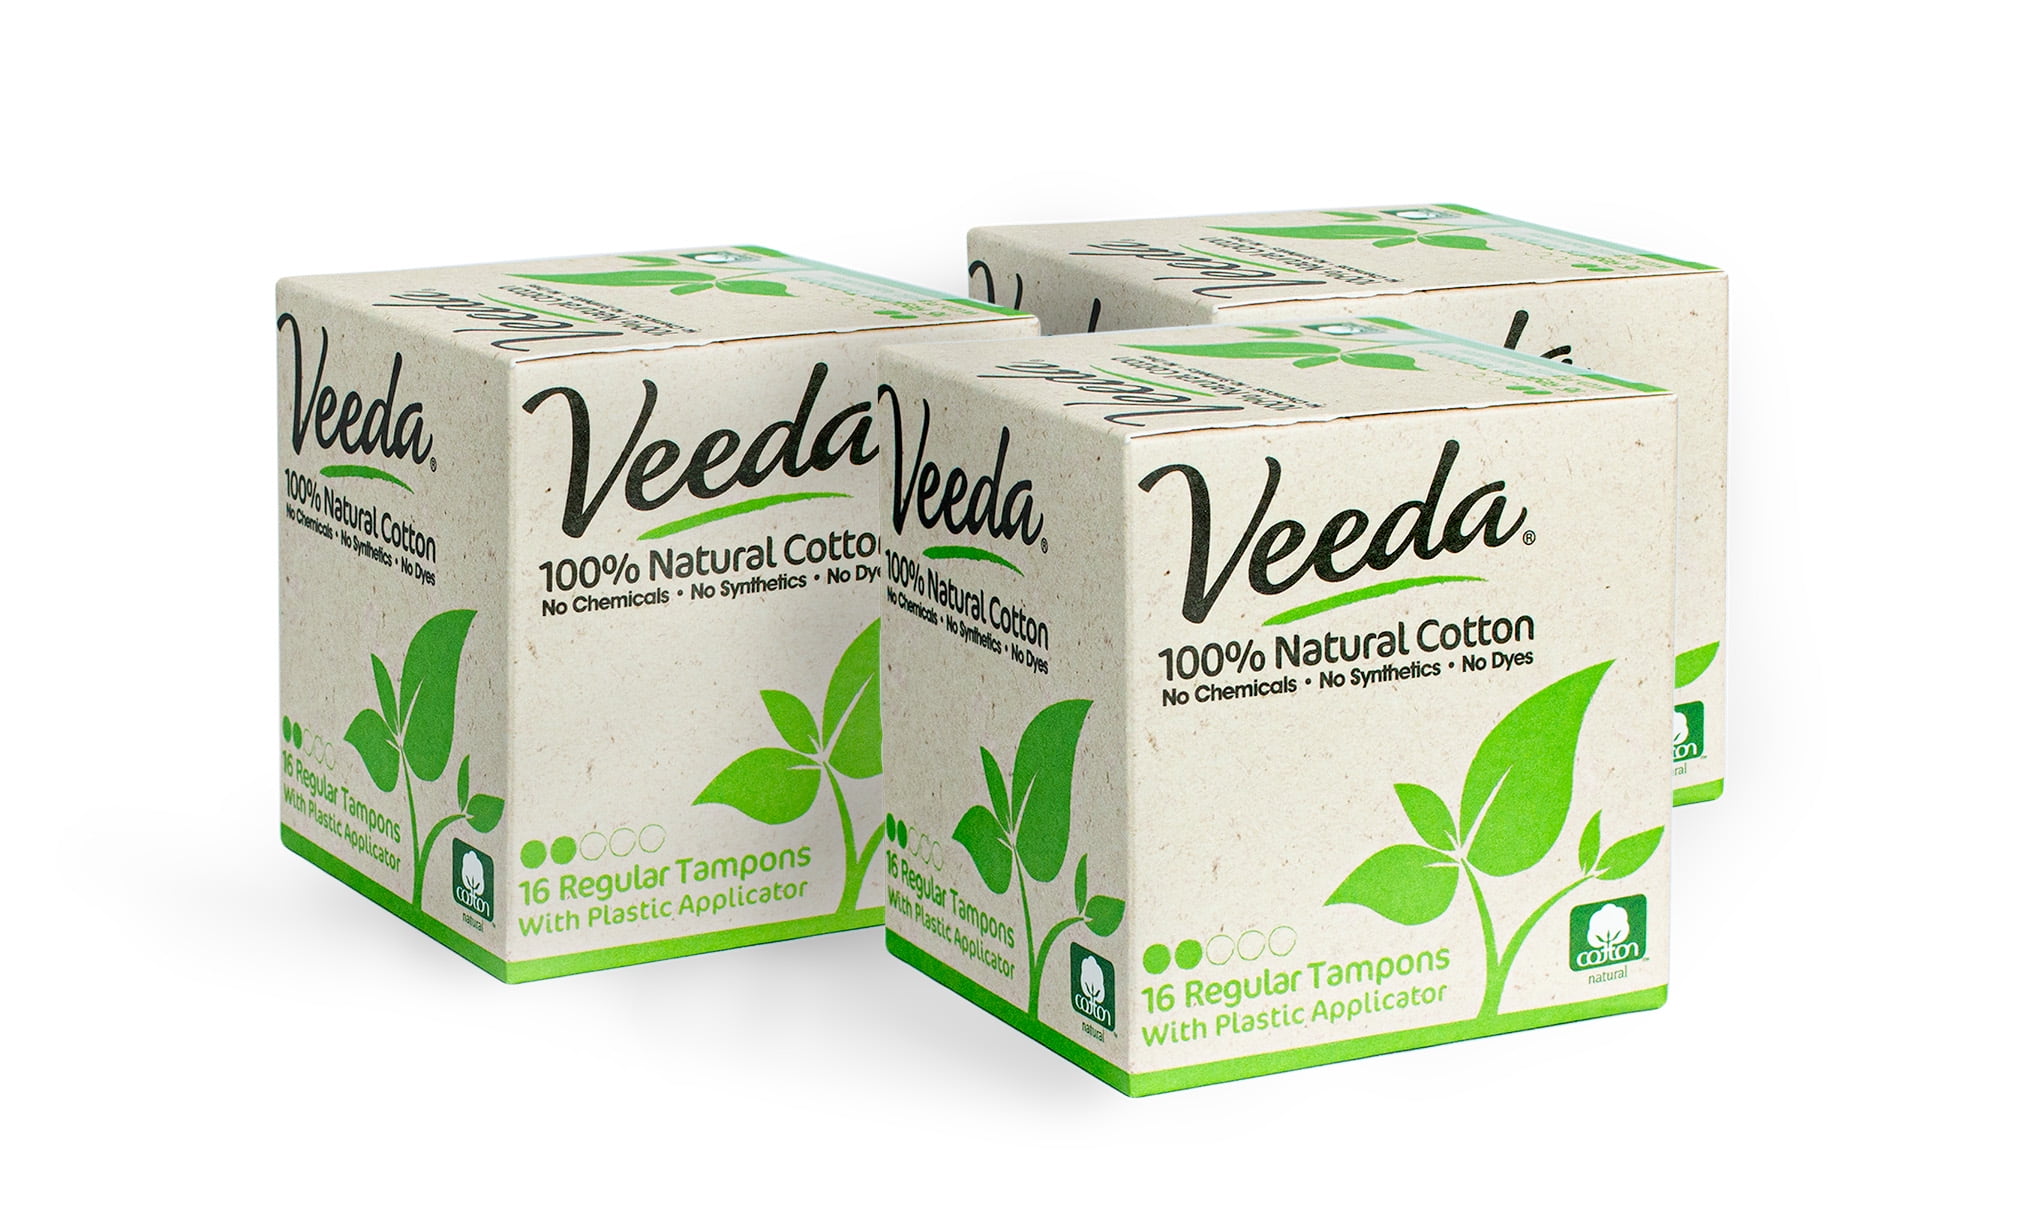 Veeda 100% Natural Cotton Compact BPA-Free Applicator Tampons